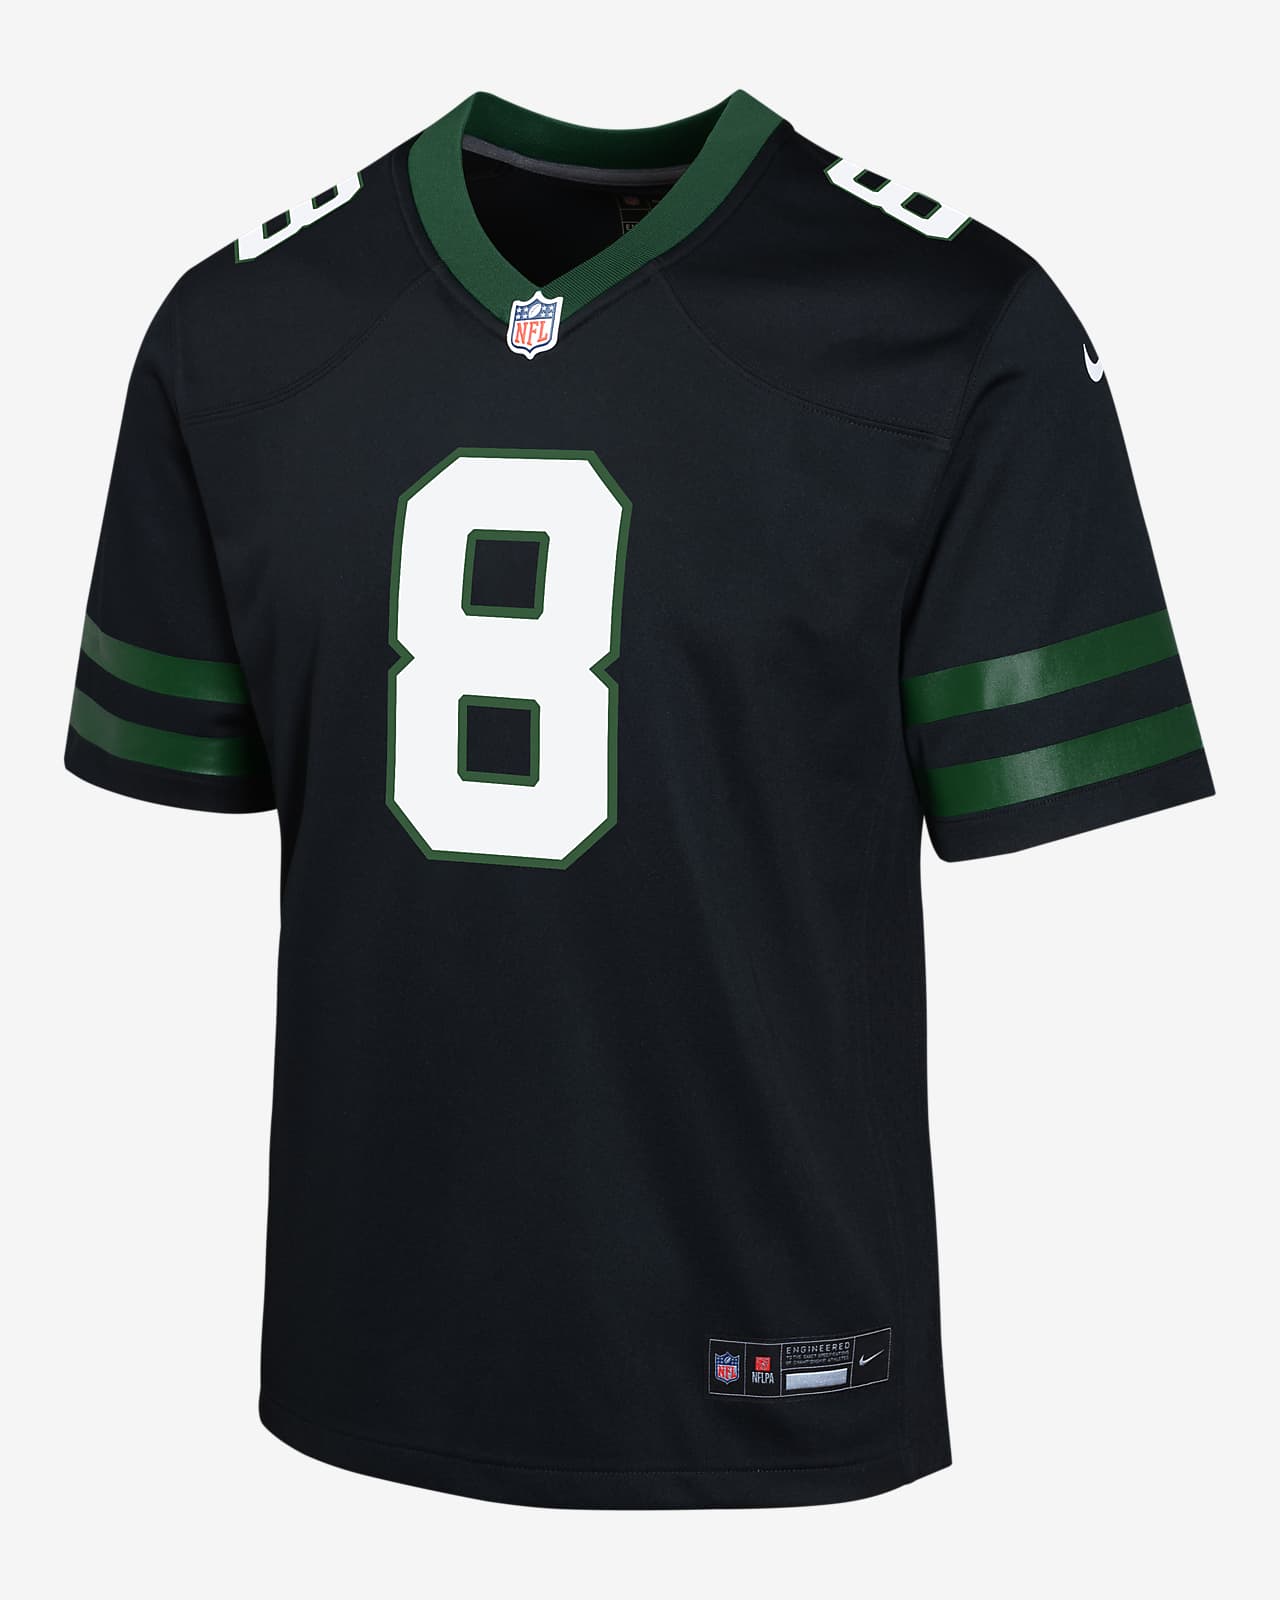 Jersey Nike de la NFL Game para niños talla grande Aaron Rodgers New York Jets